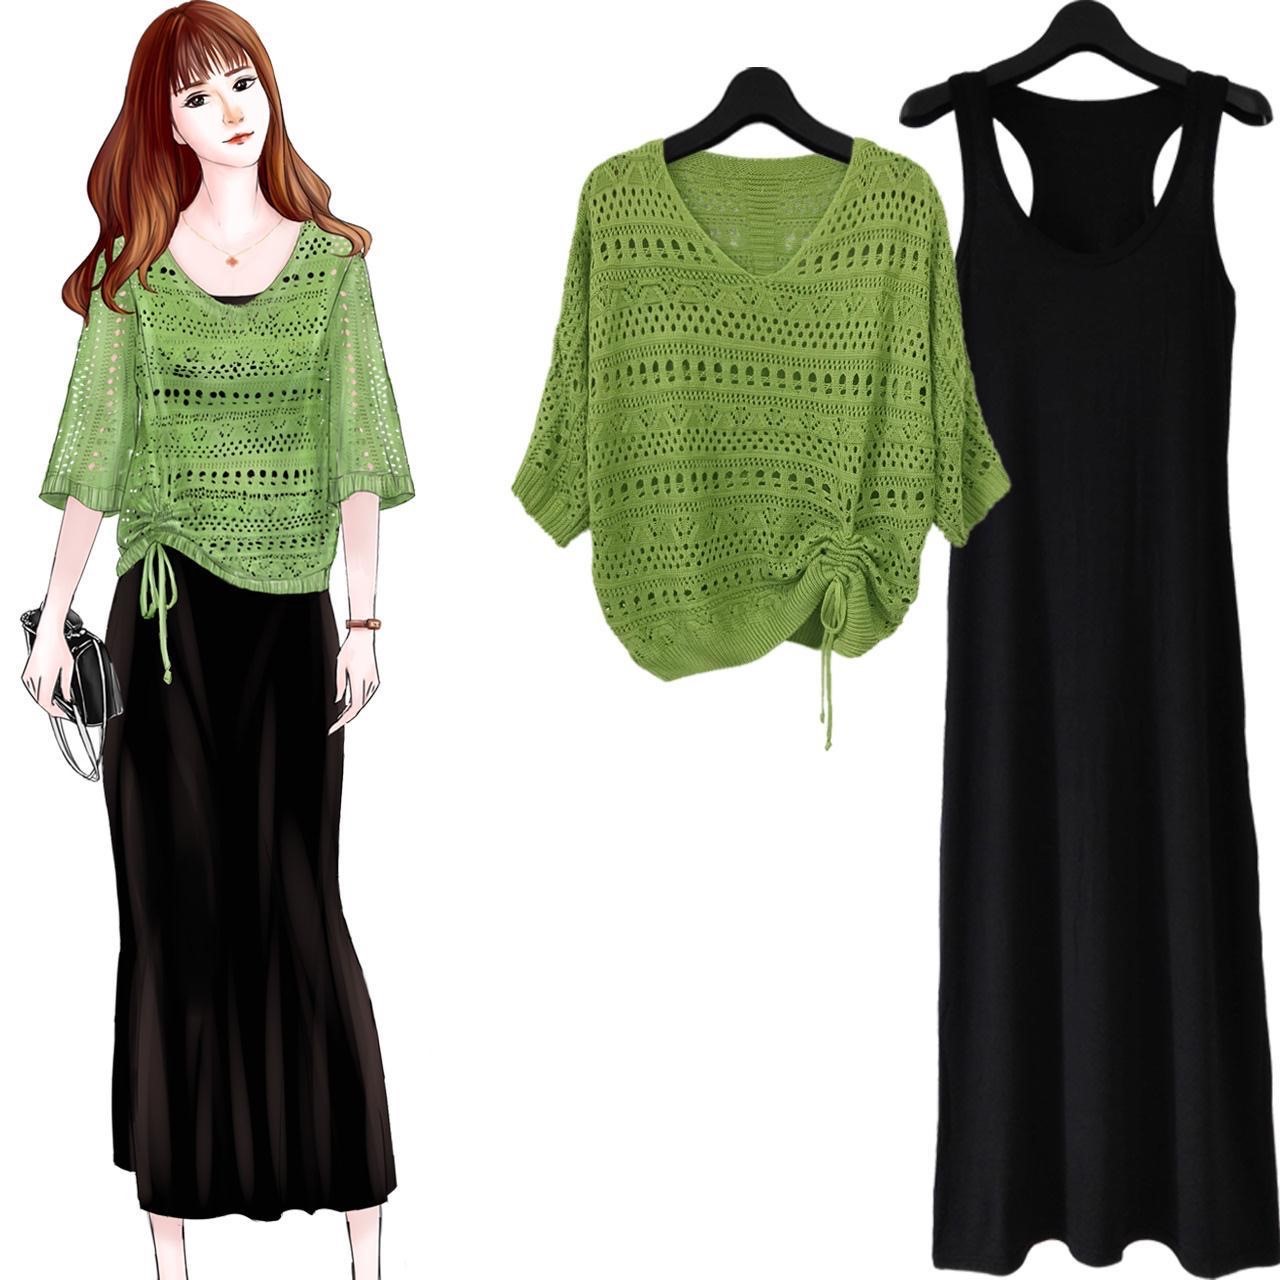 HF-2PTS01: Spring and summer green hole shirt, openwork knit blouse, thin bat shirt dress, two-piece dress